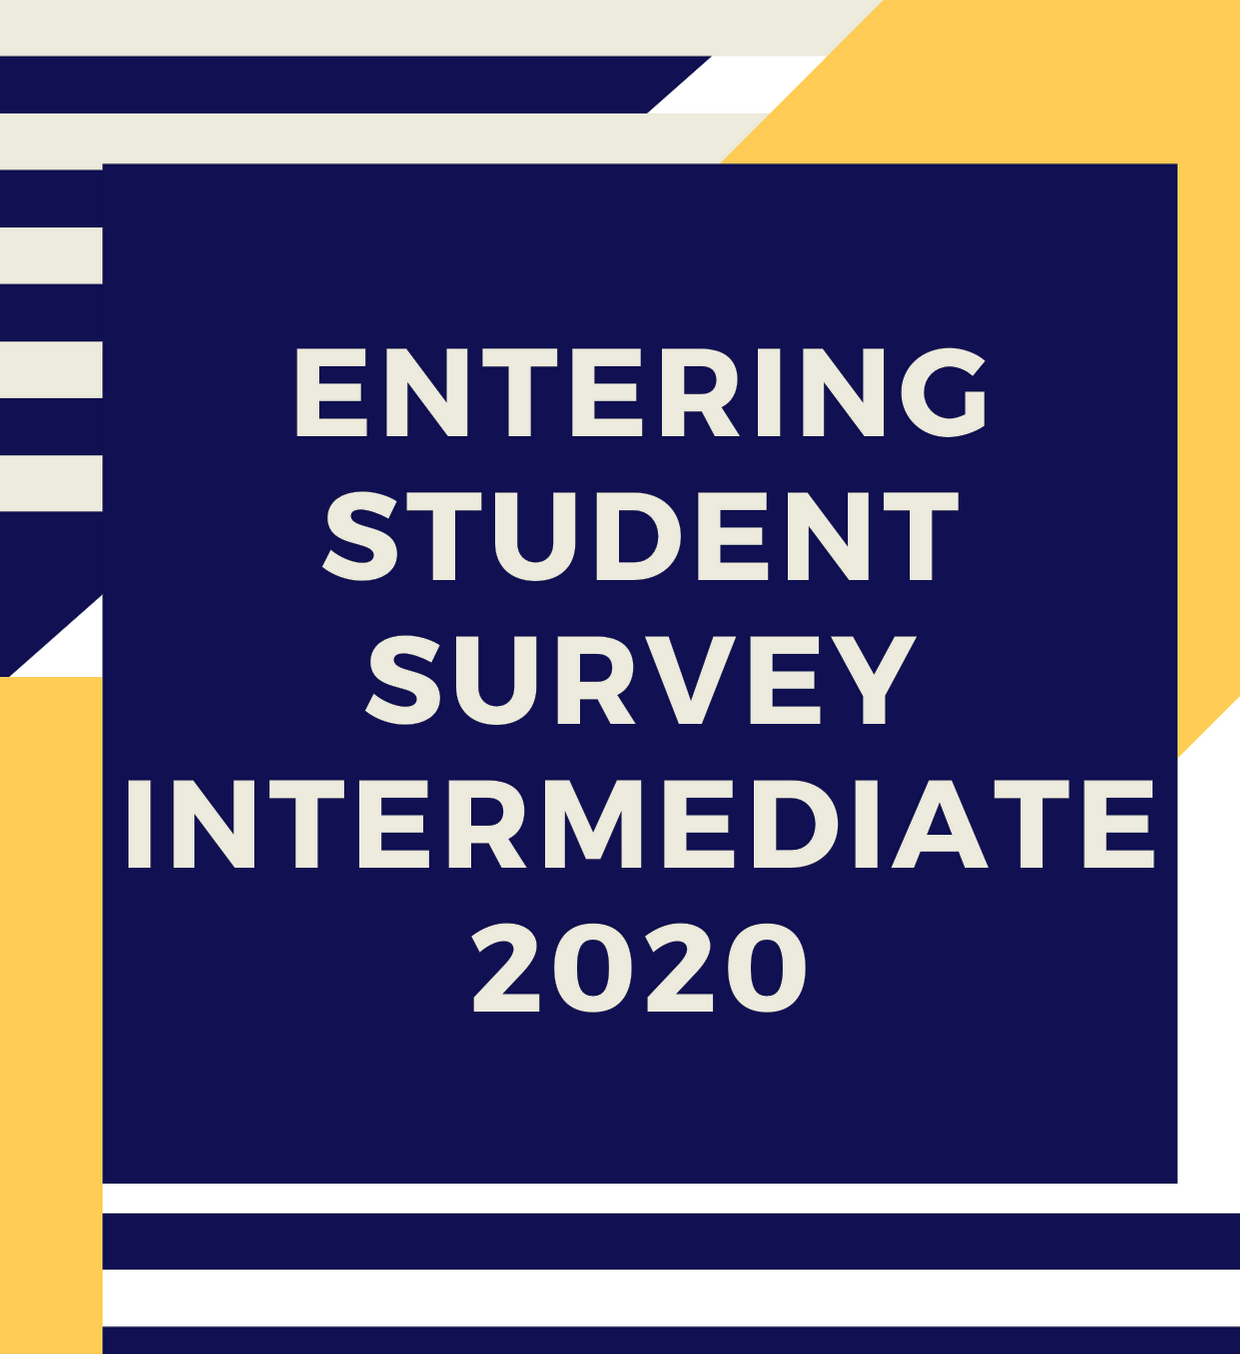 Entering Student Survey Intermediate 2020